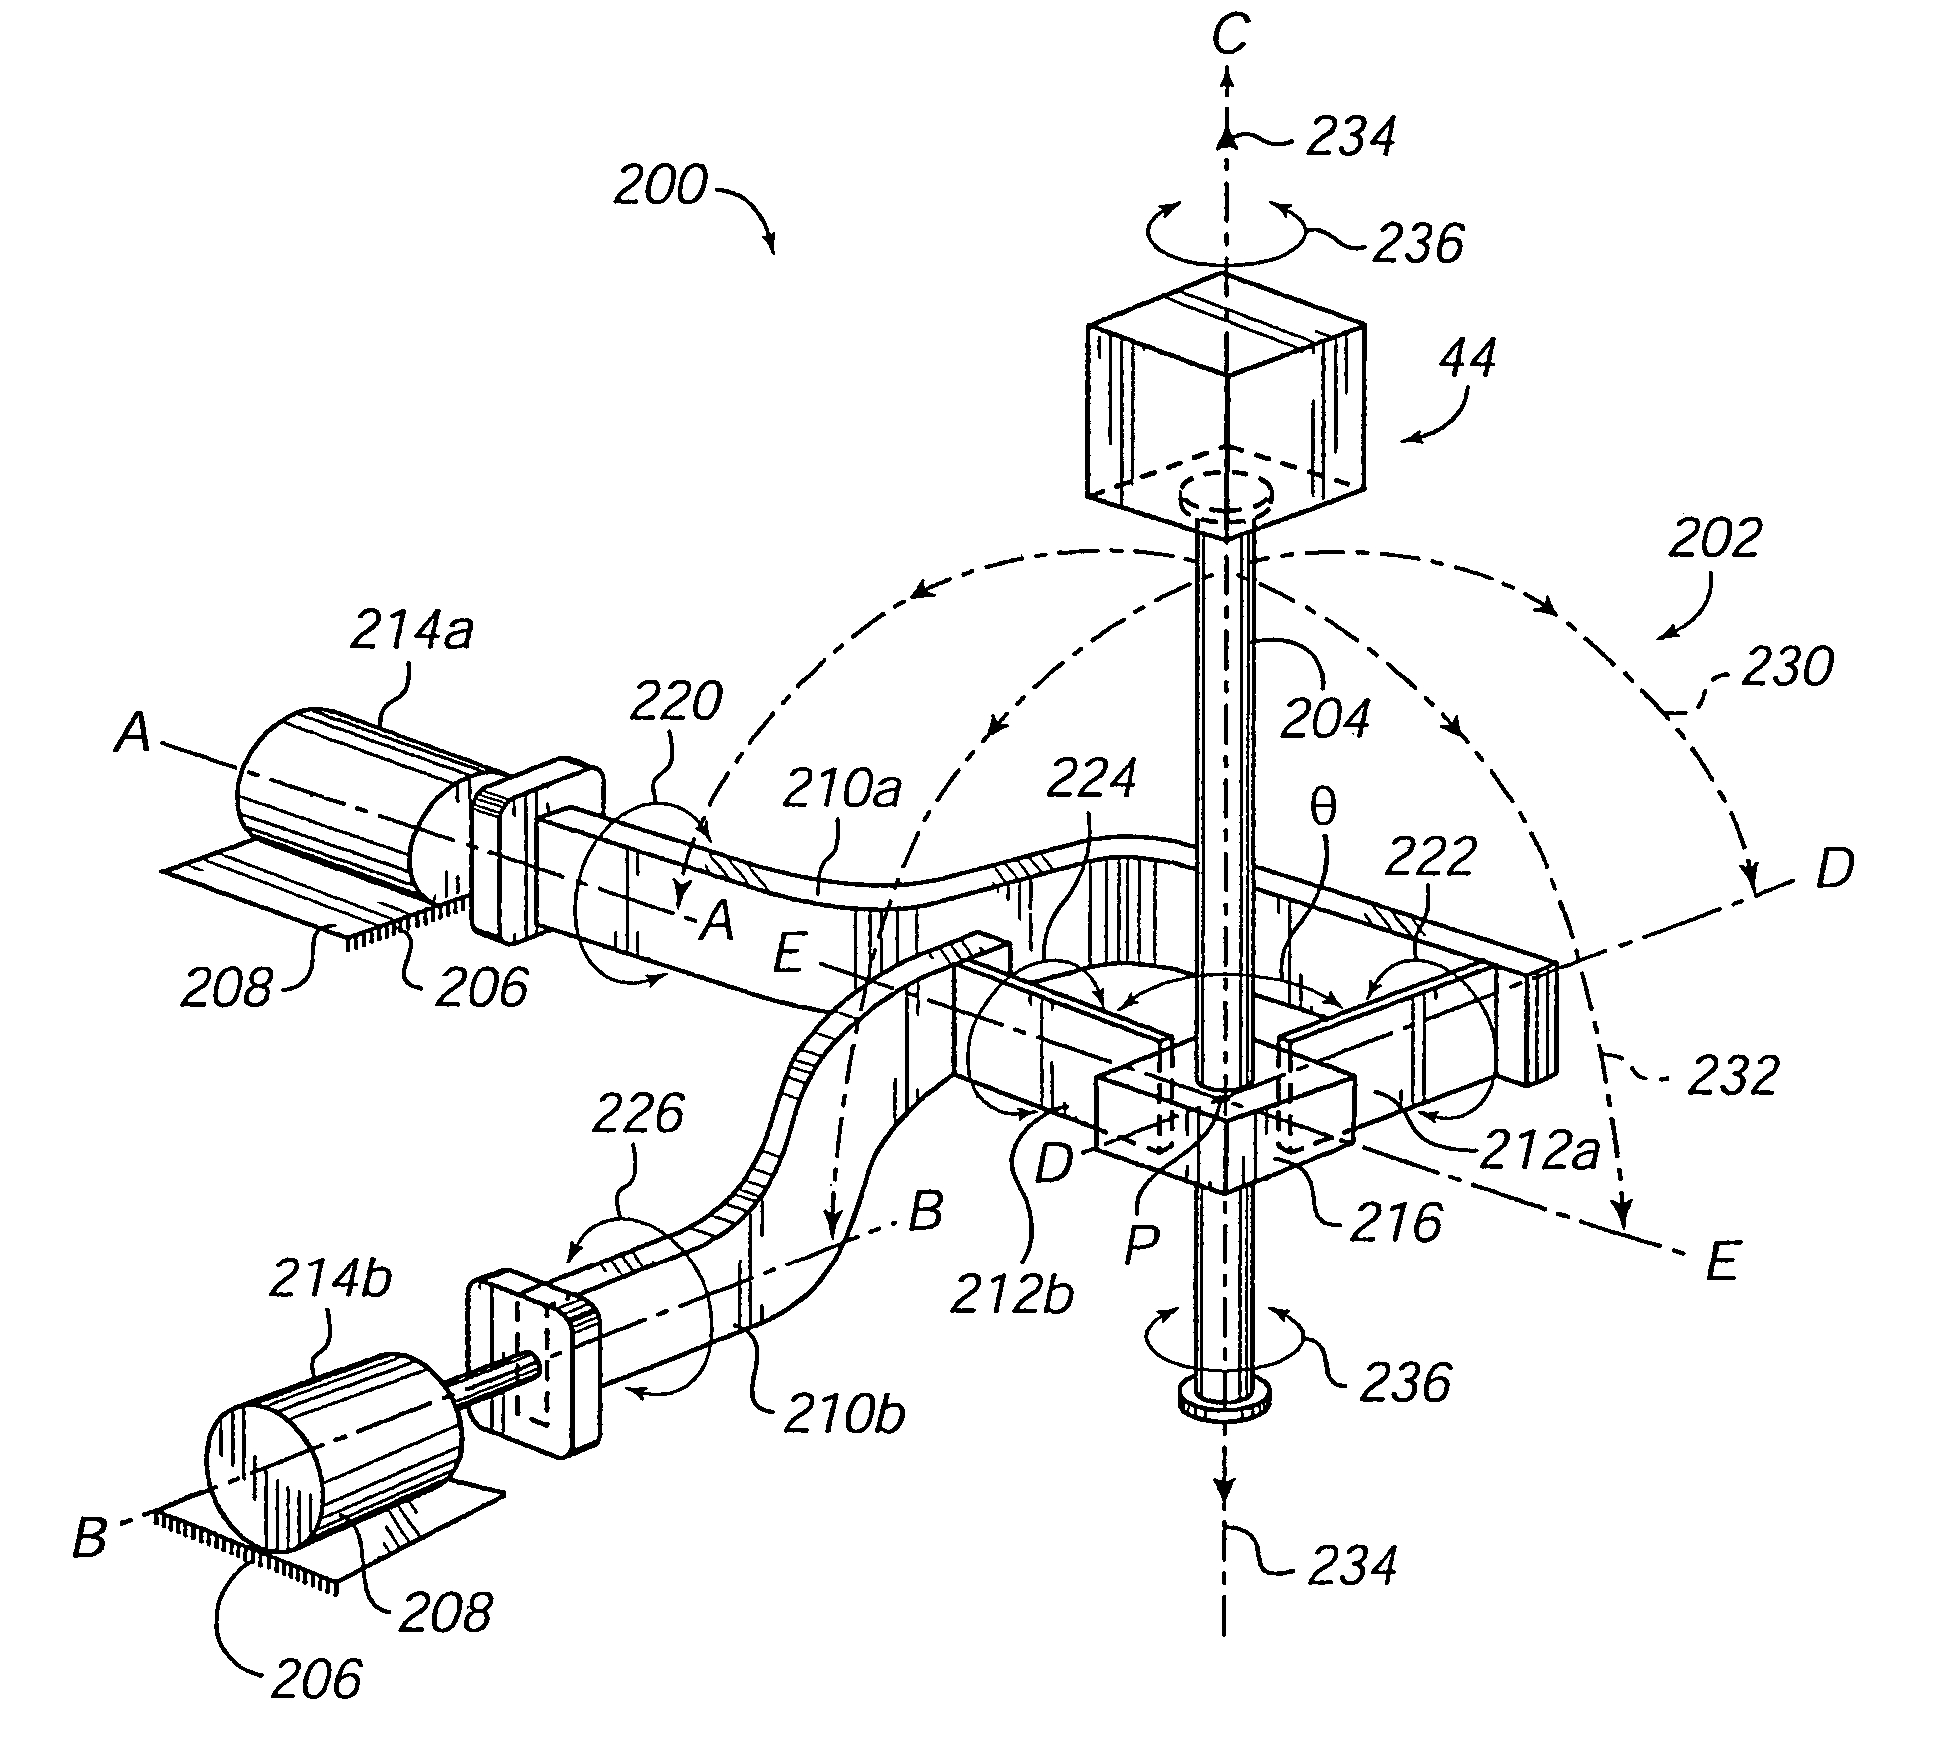 Computer interface apparatus including linkage having flex